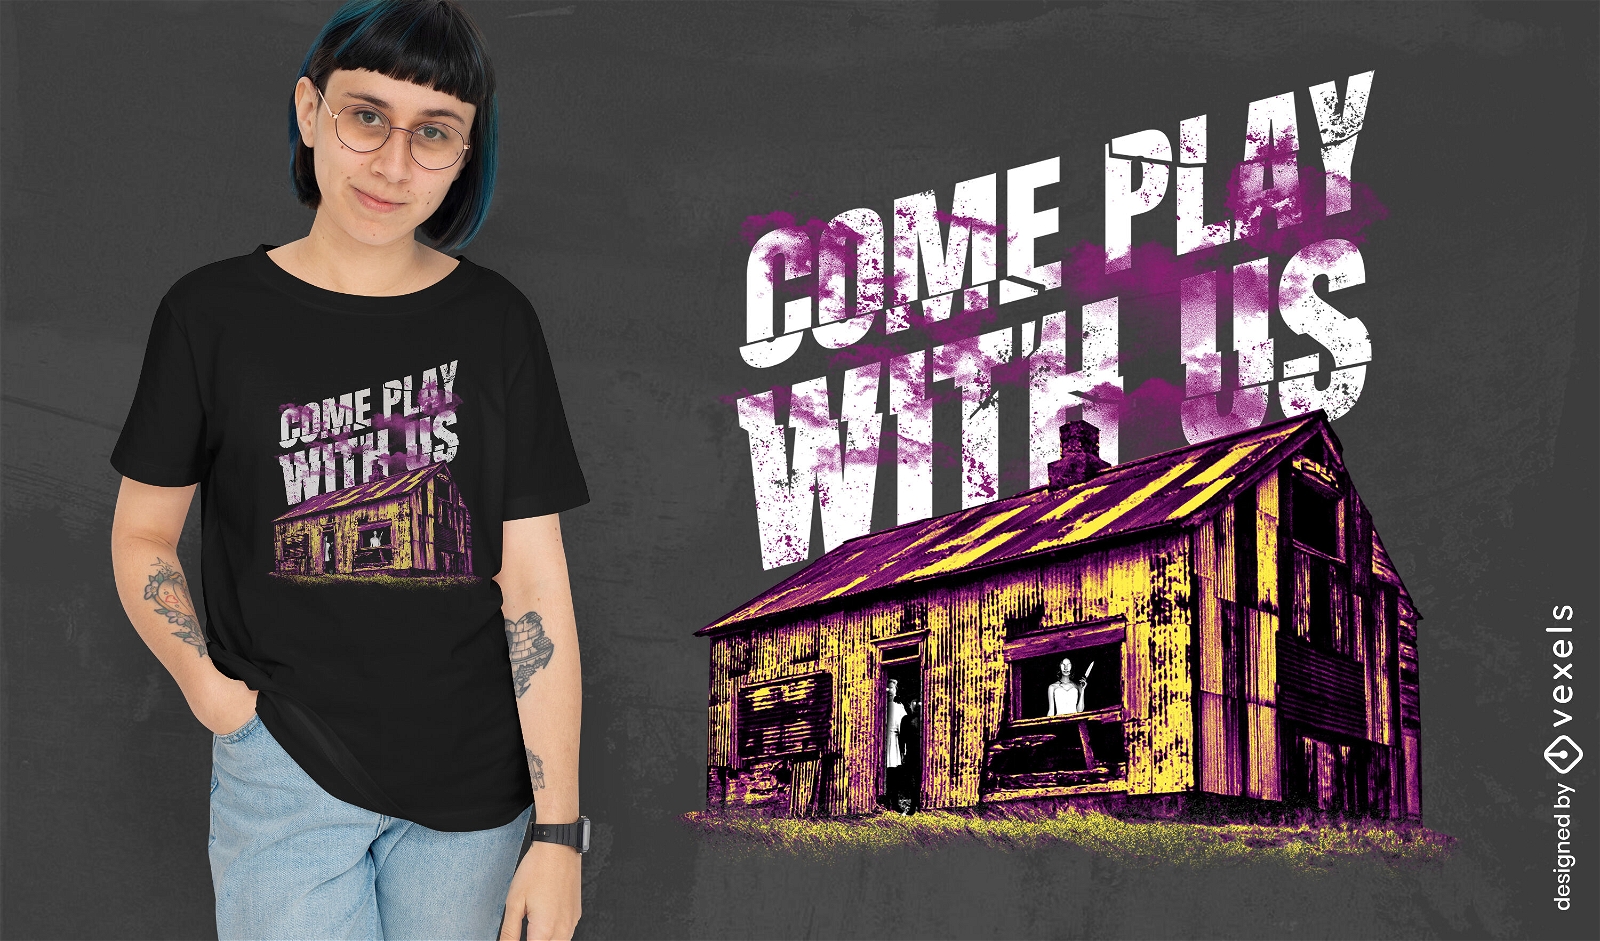 Horror haunted house t-shirt design